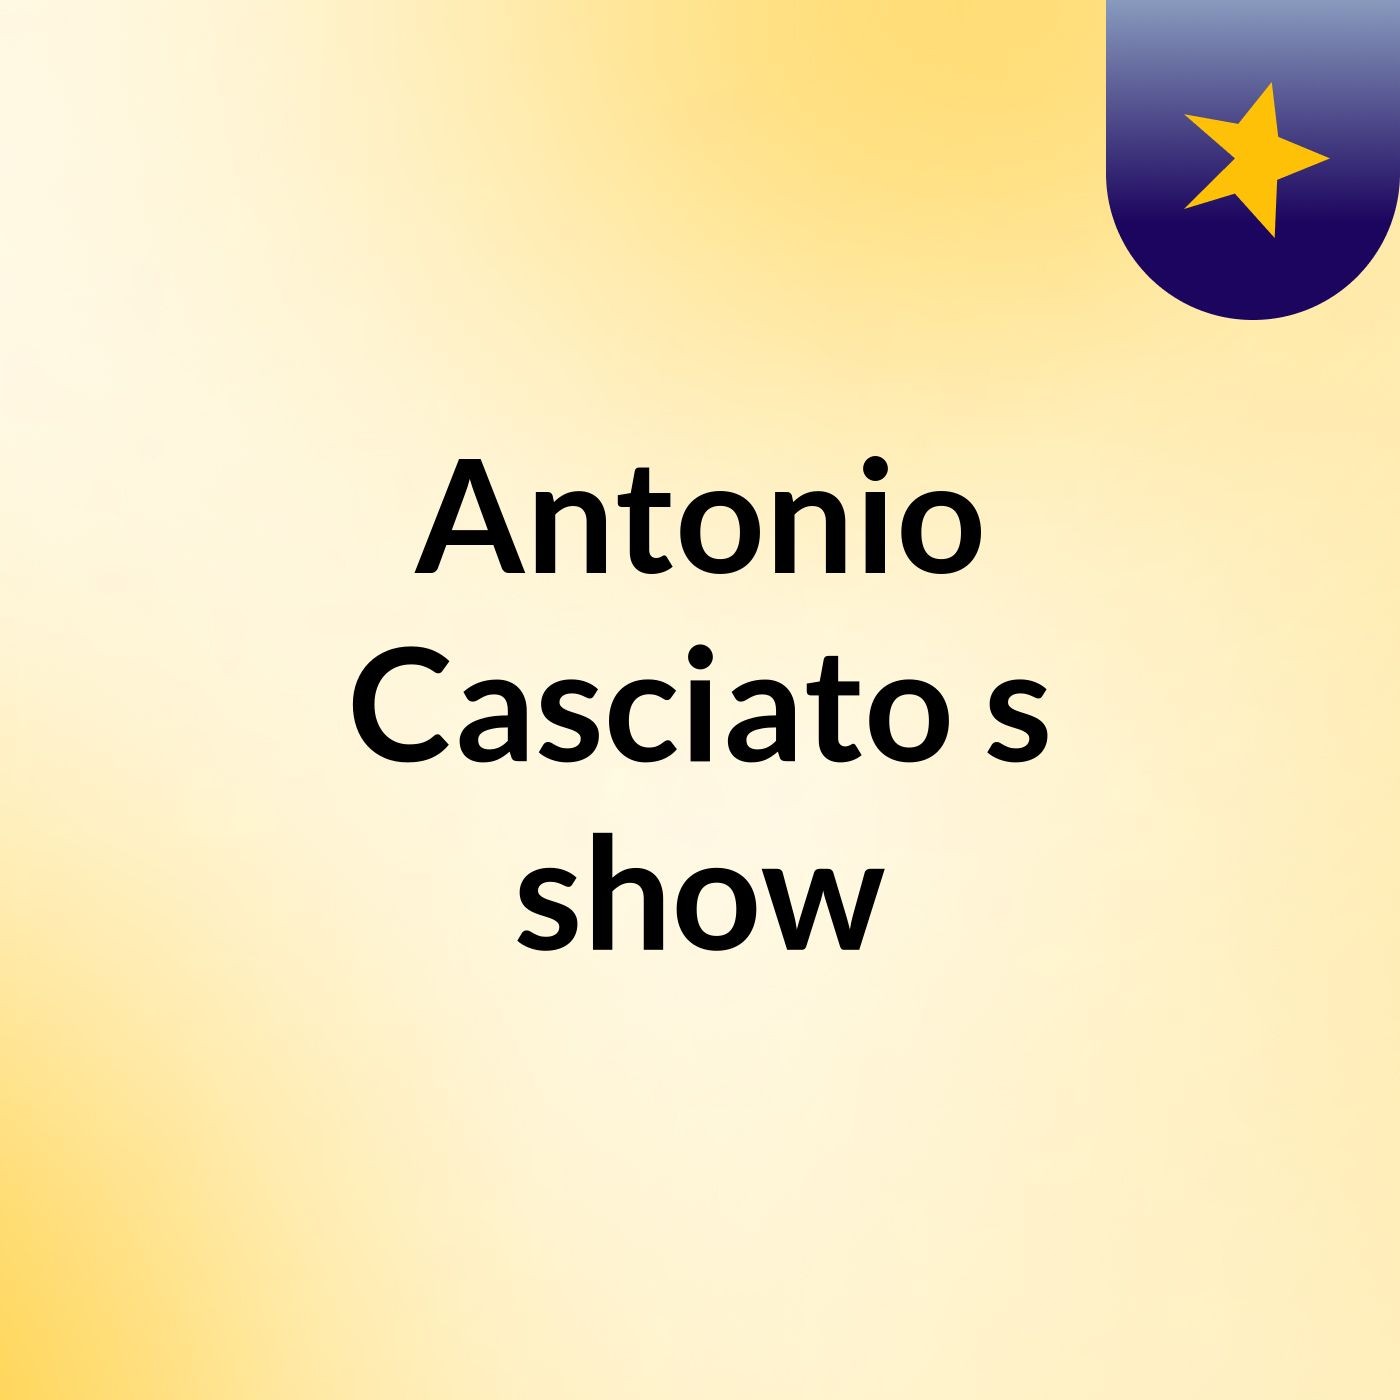 Antonio Casciato's show